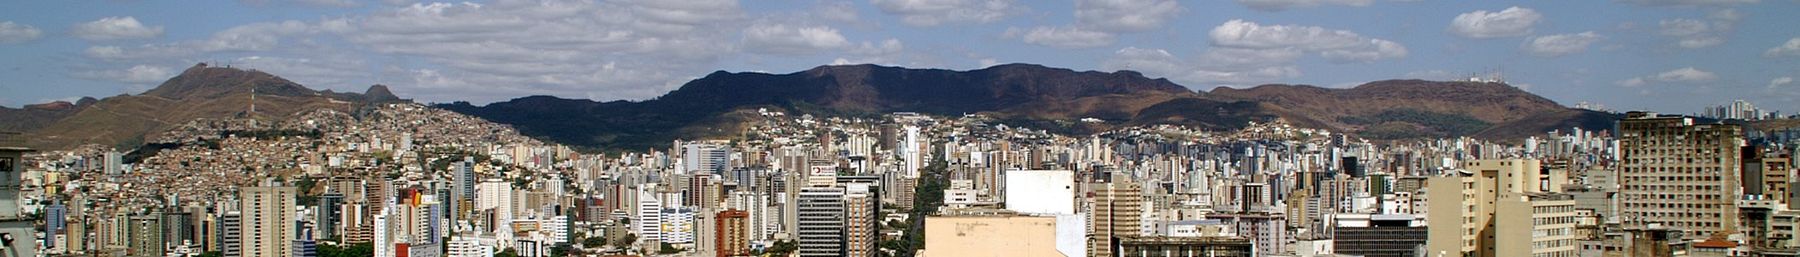 Belo Horizonte banner.jpg